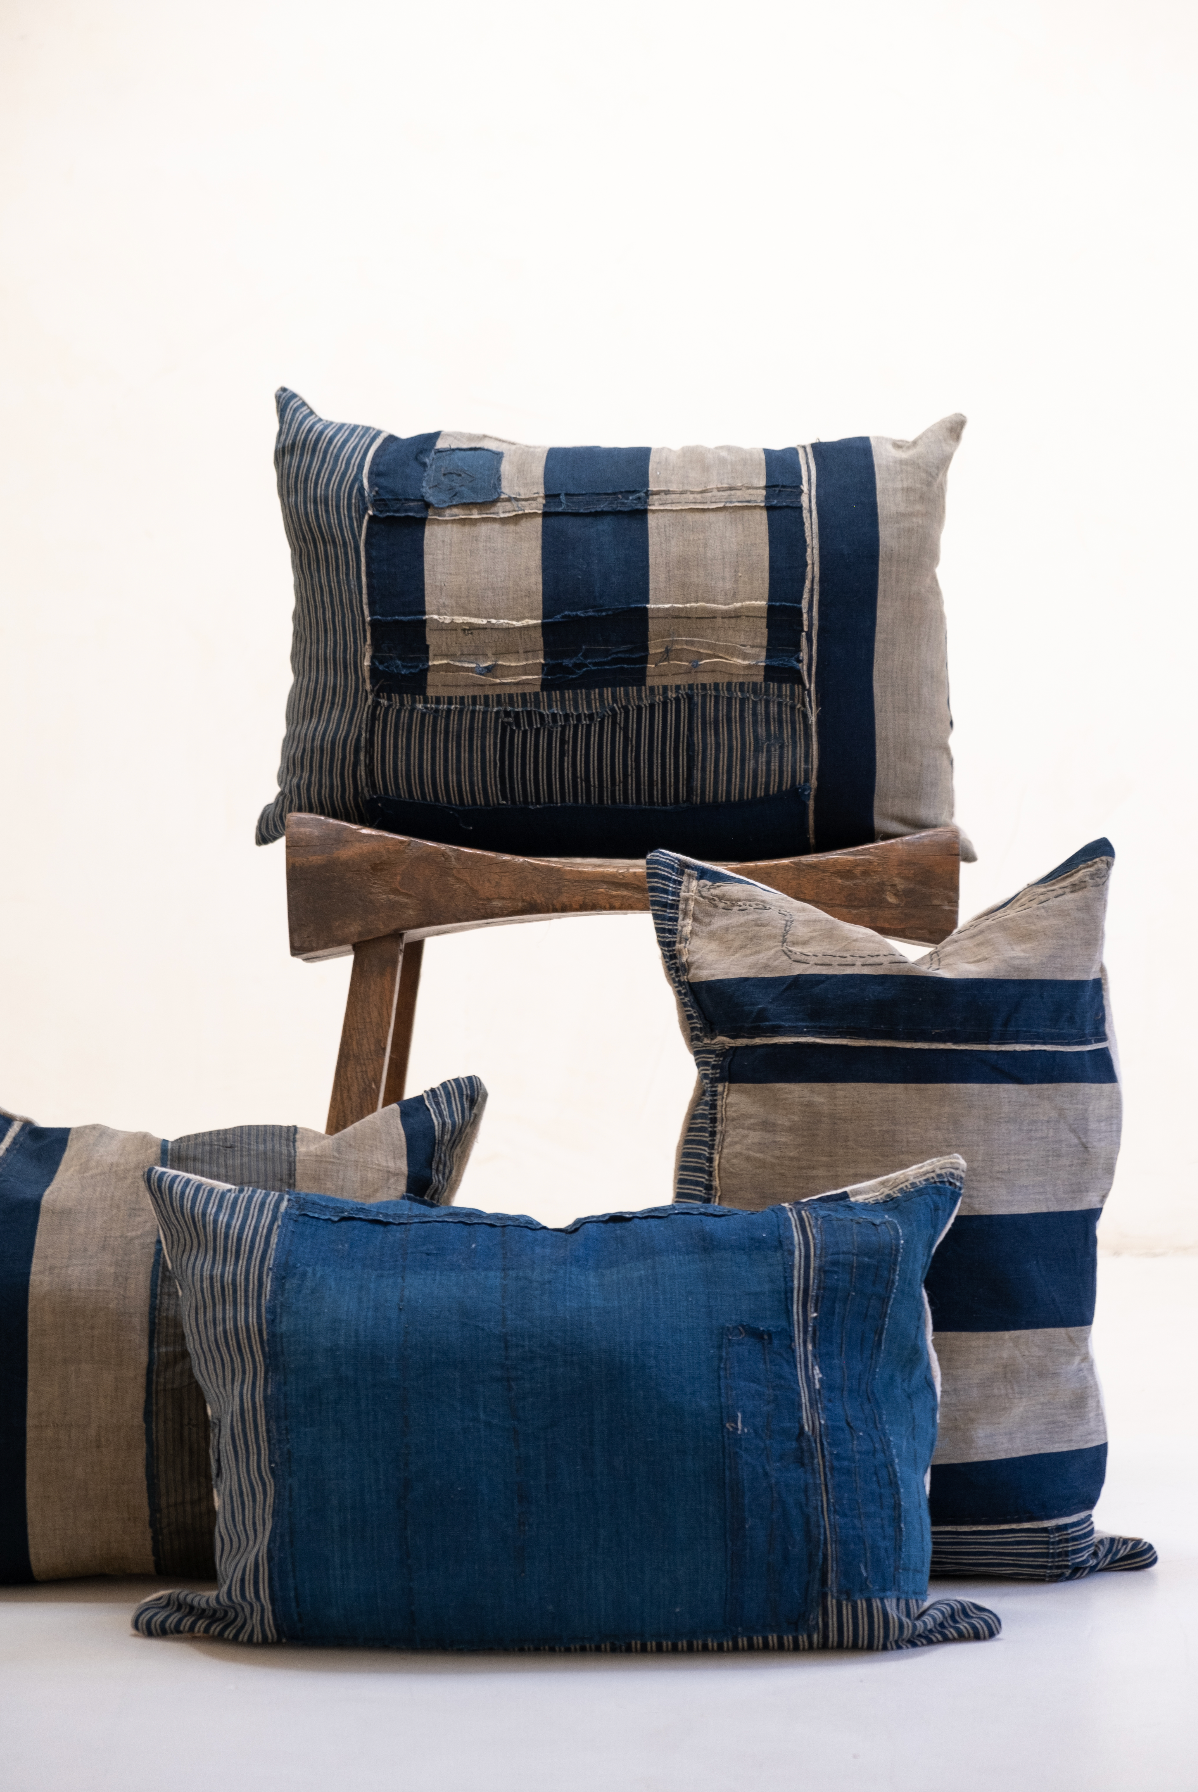 Blue Japanese Pillows, Vintage